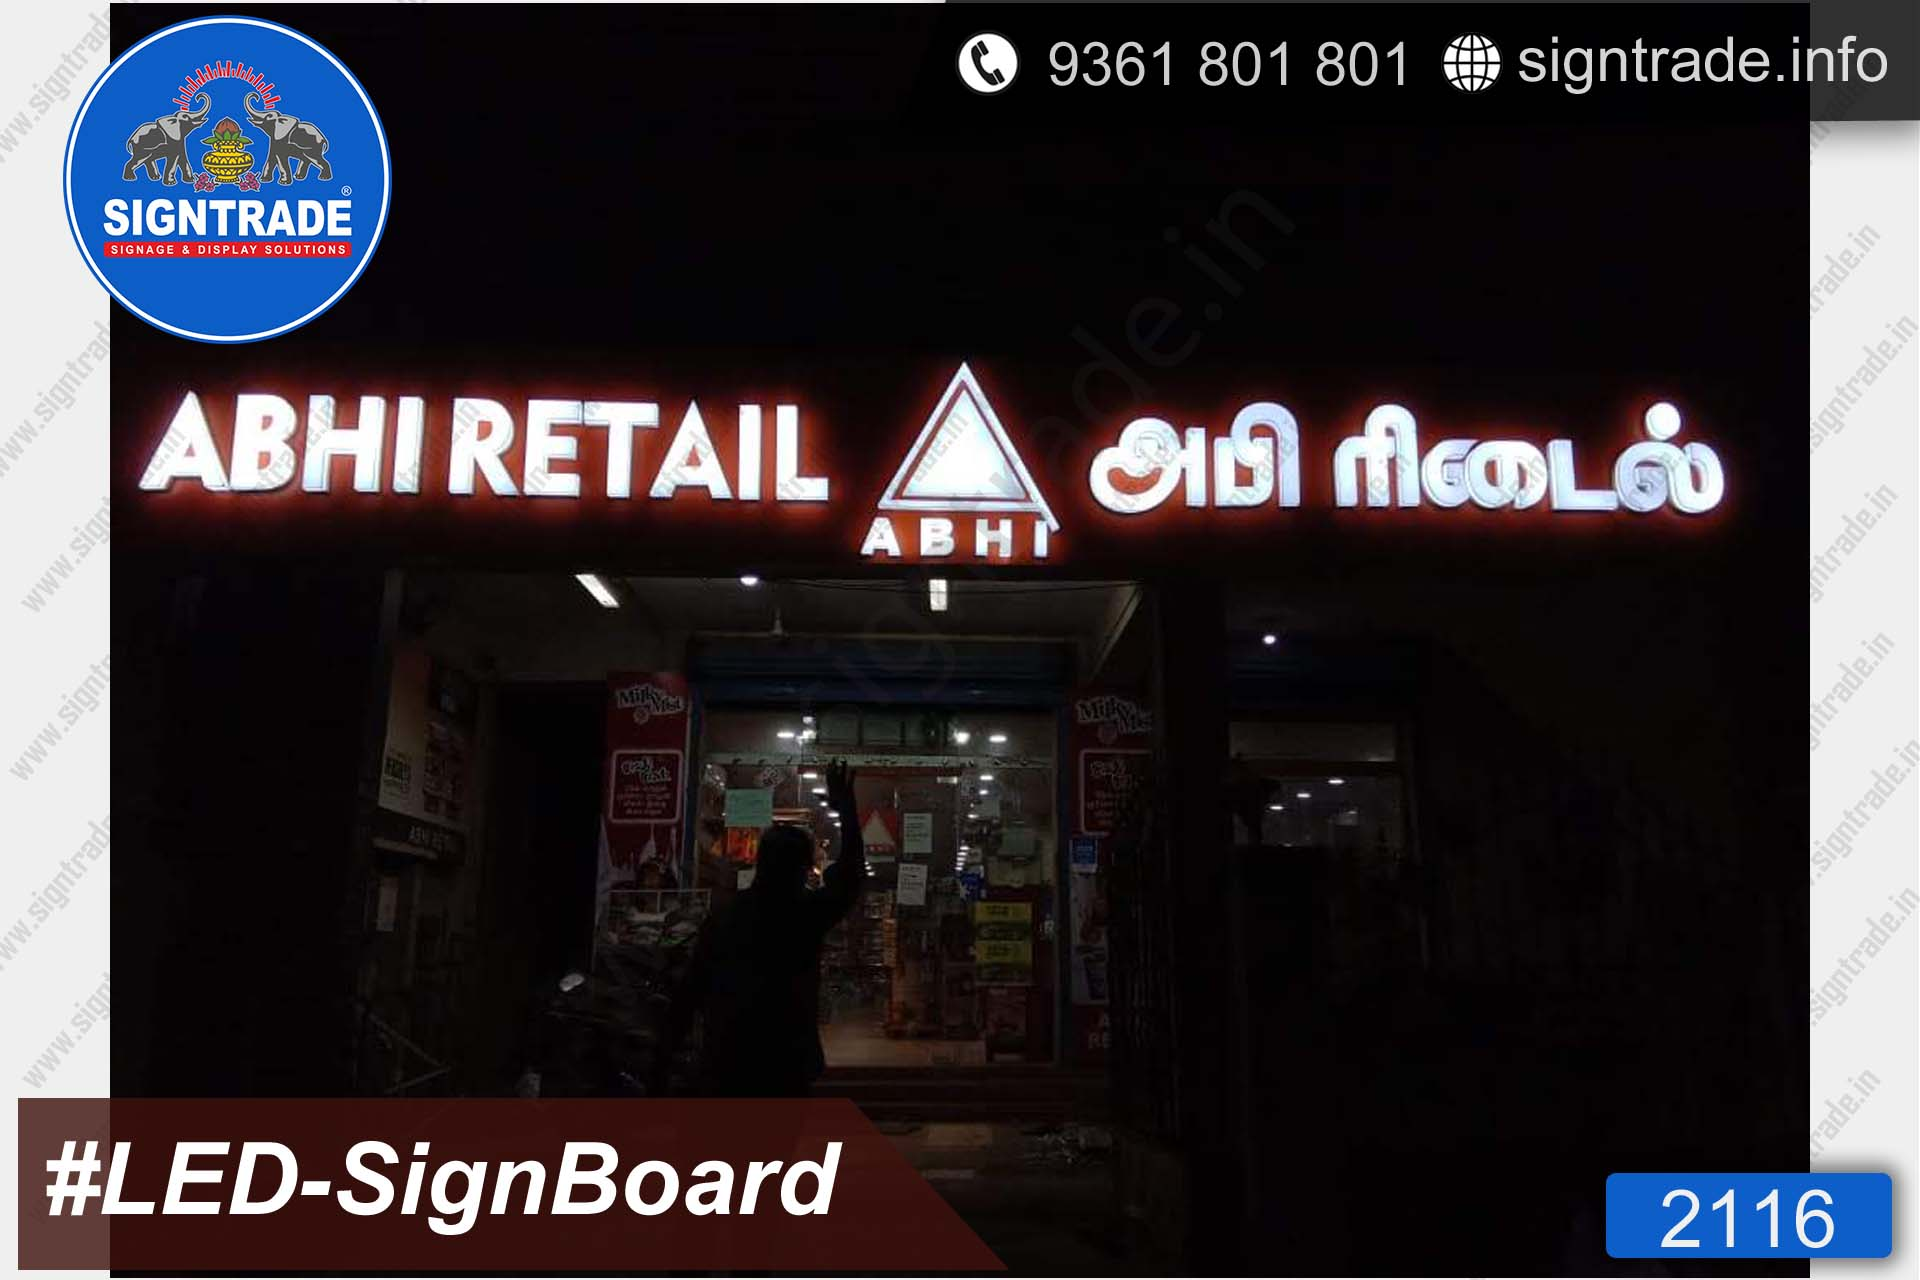 abhi retail led sign board